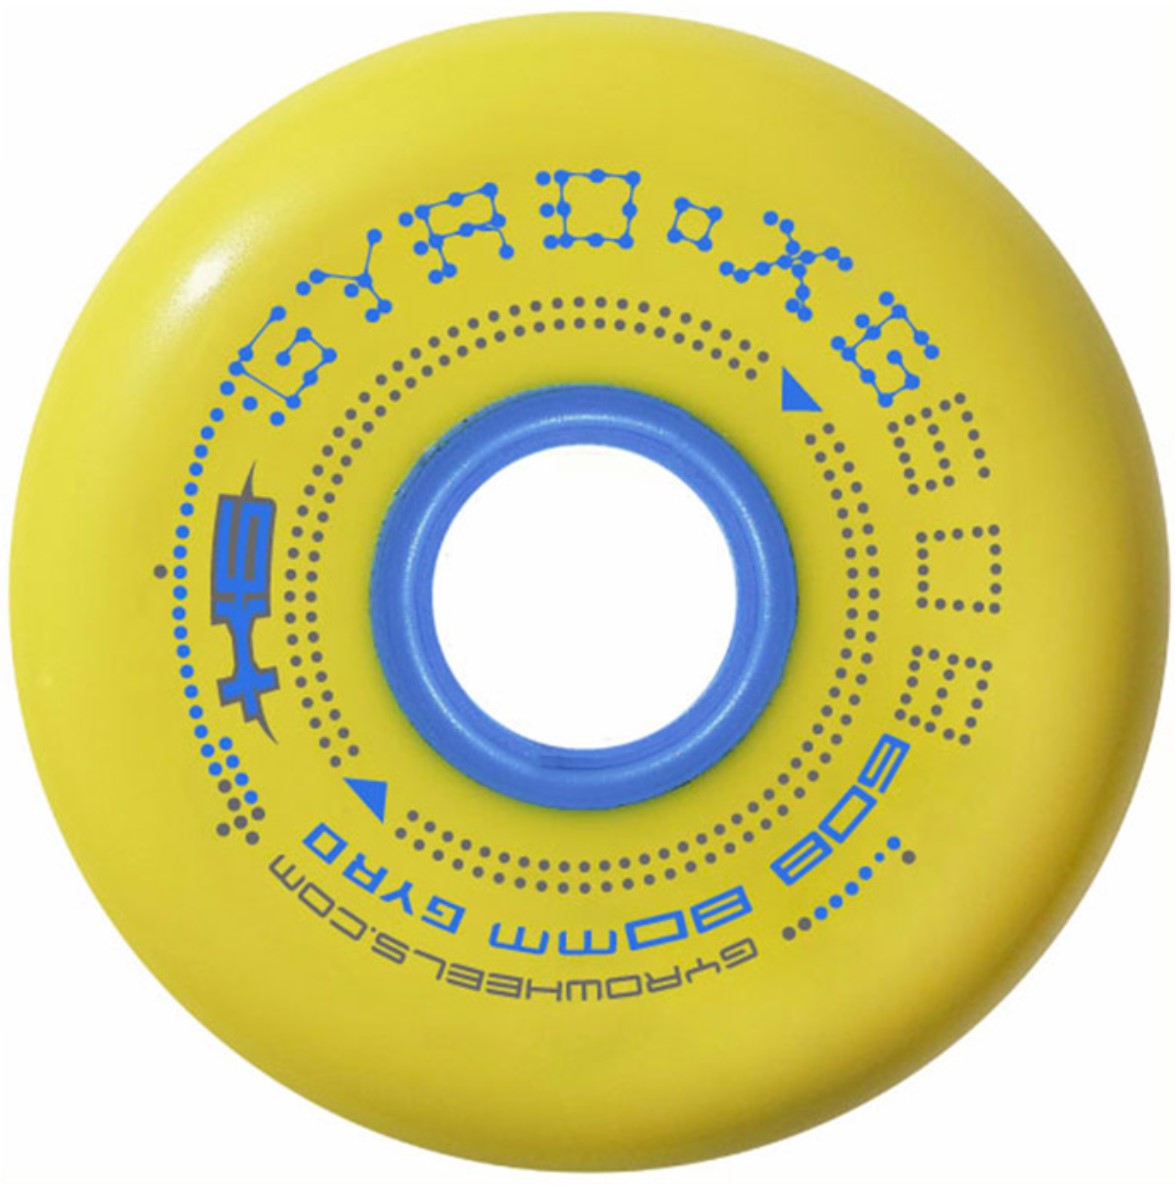 A yellow Gyro XG wheel, especially useful for speed slalom